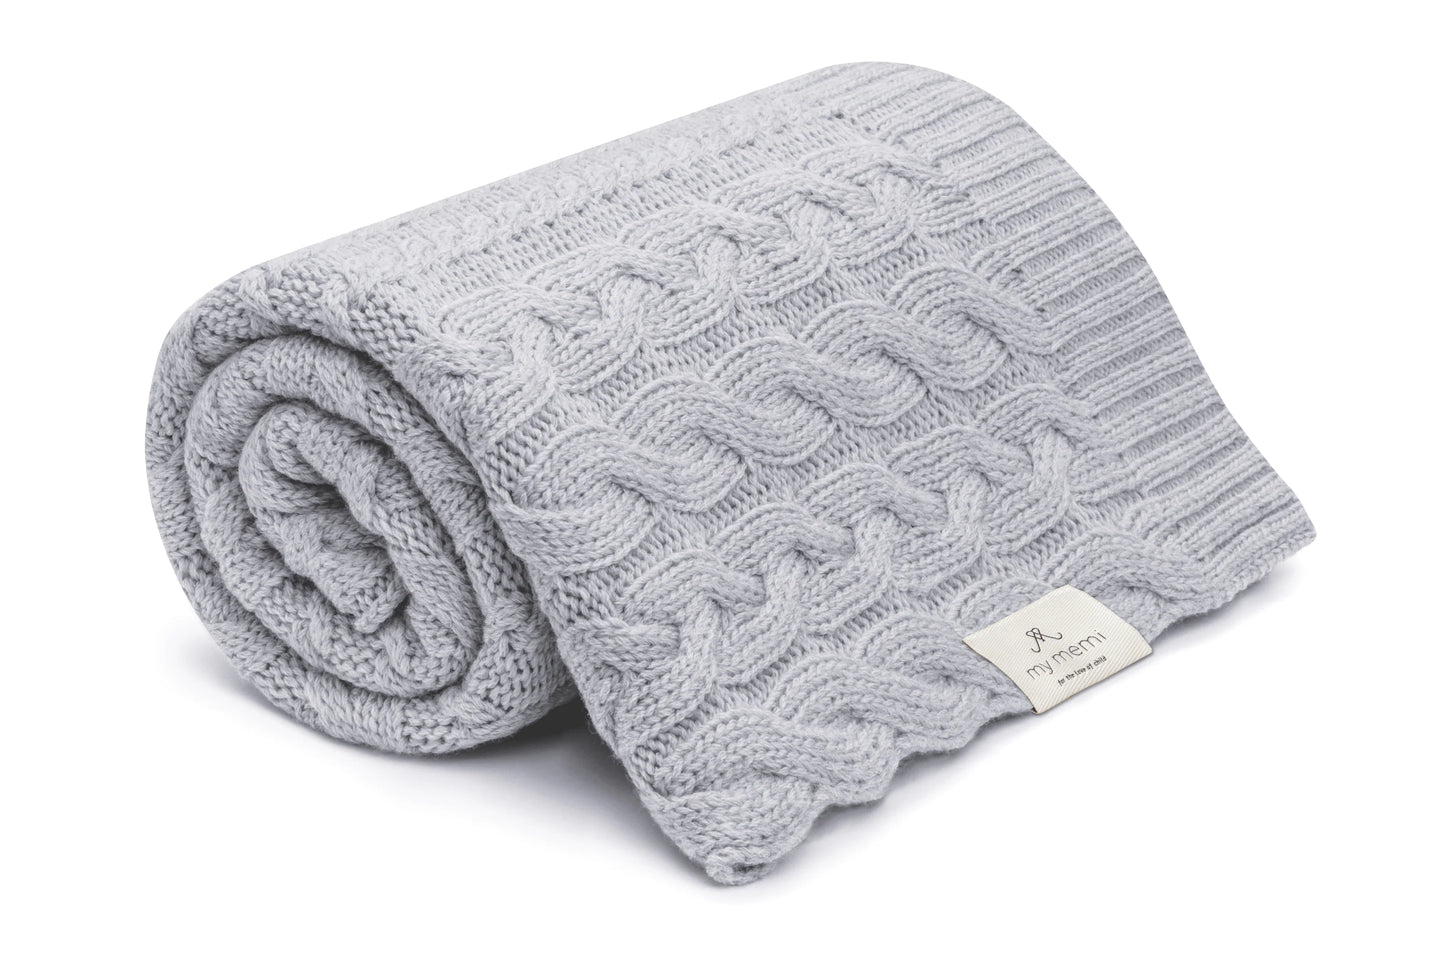 100% Natural Merino Wool Blanket